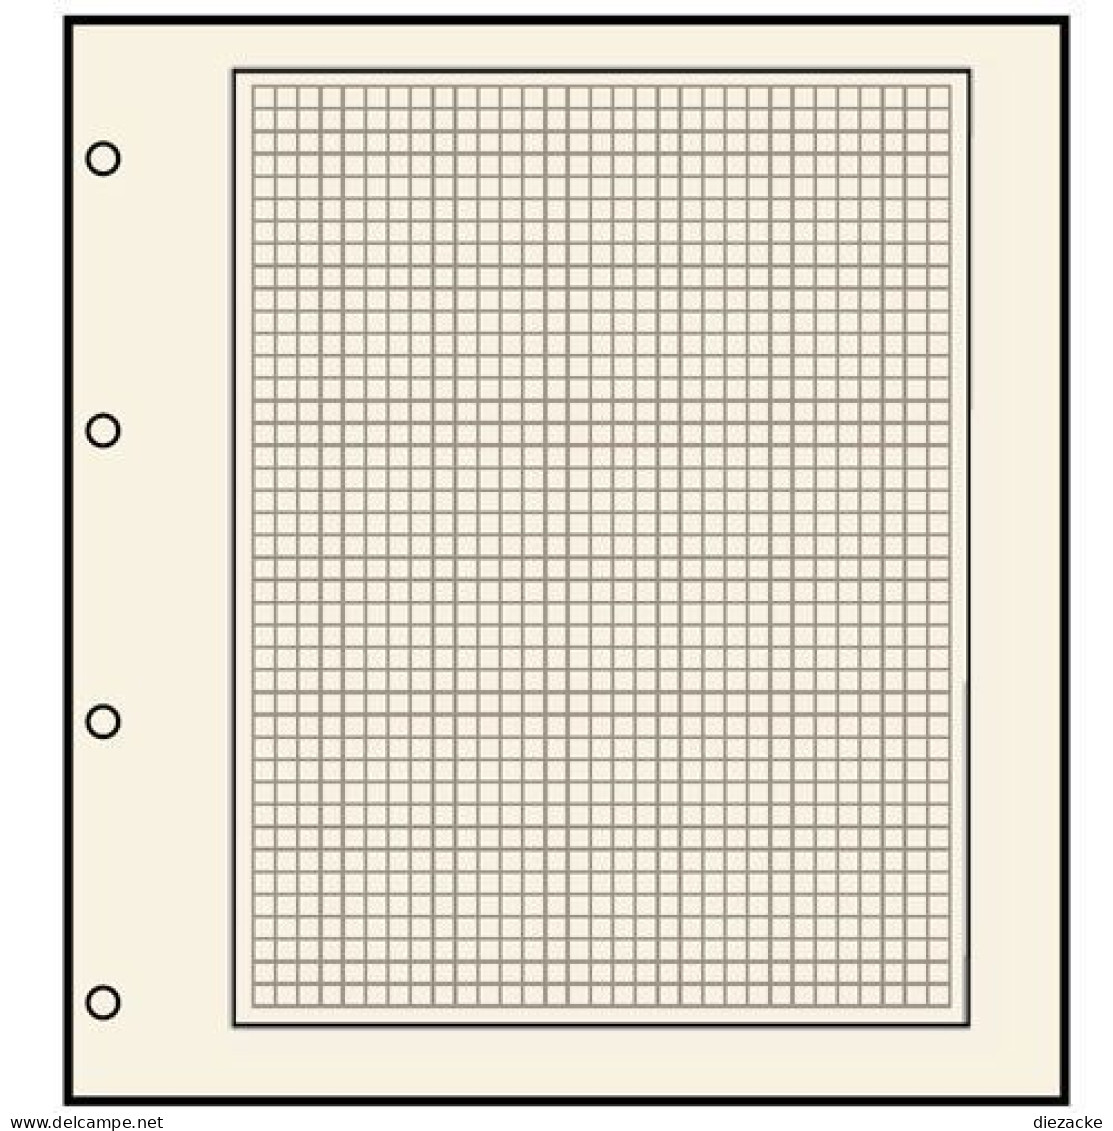 Safe Compact A4-Blankoblatt Nr. 491 Chamois Mit Lochung Und Netz, 10er Pack Neu ( - Blank Pages